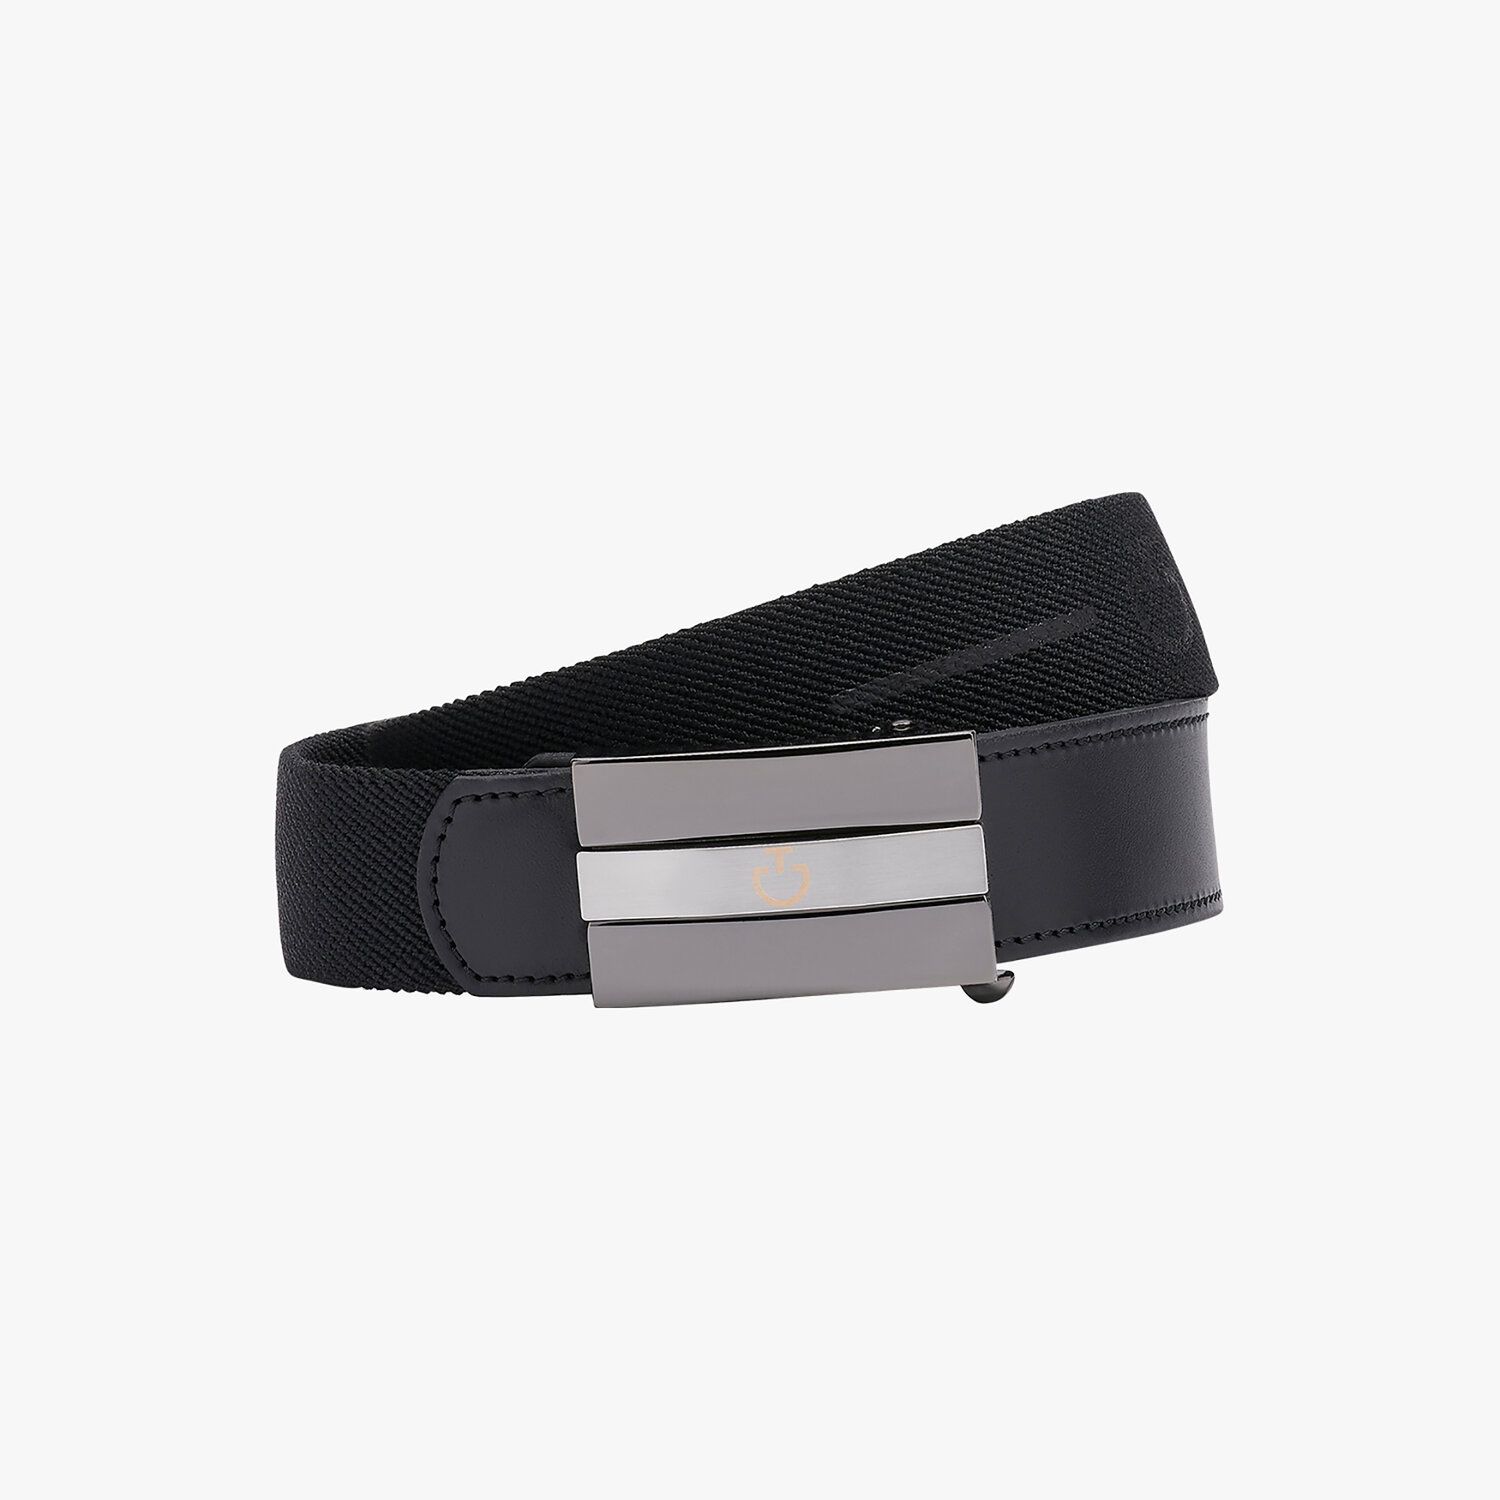 Cavalleria Toscana Woman's elastic band belt w/rubberized CT logo BLACK-1